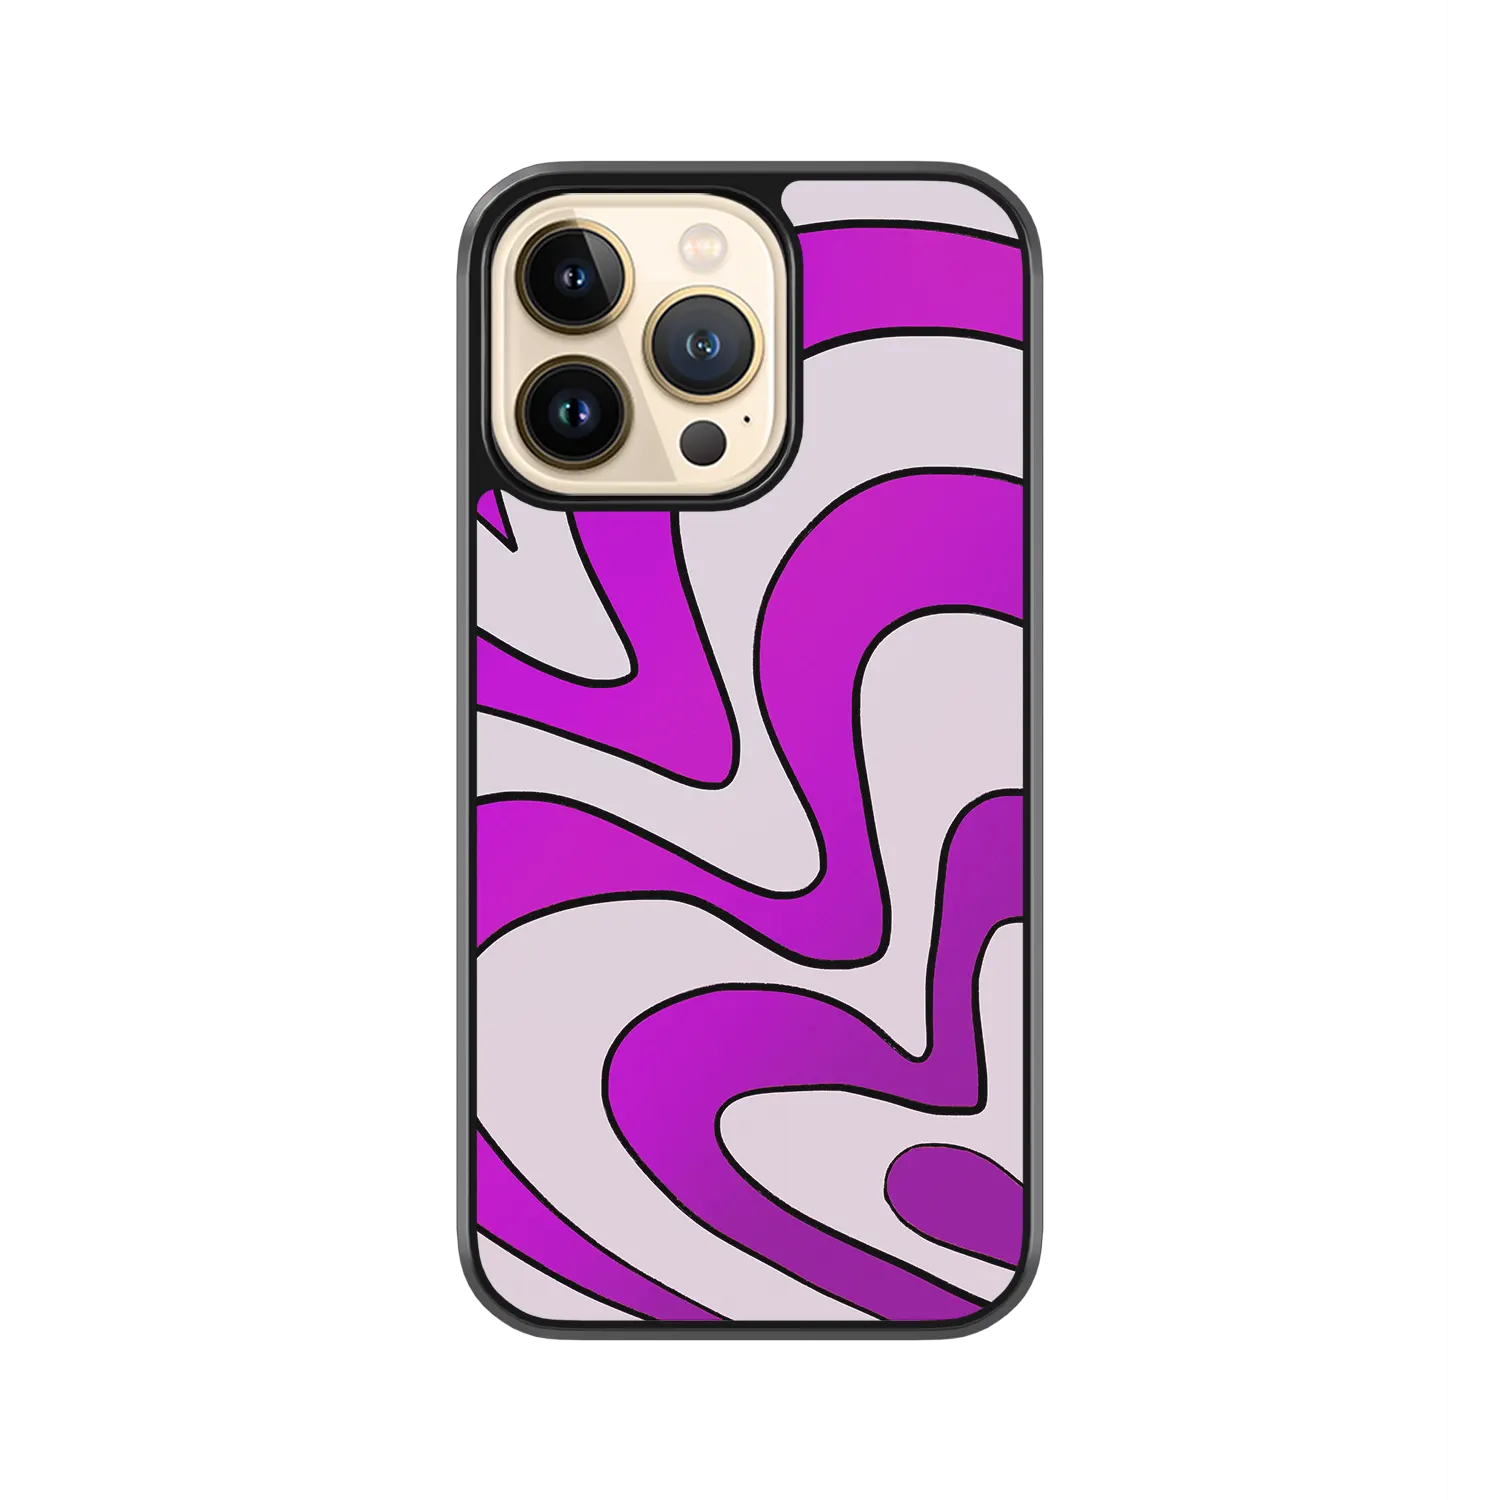 Groovy Grape iPhone 11 pro max case